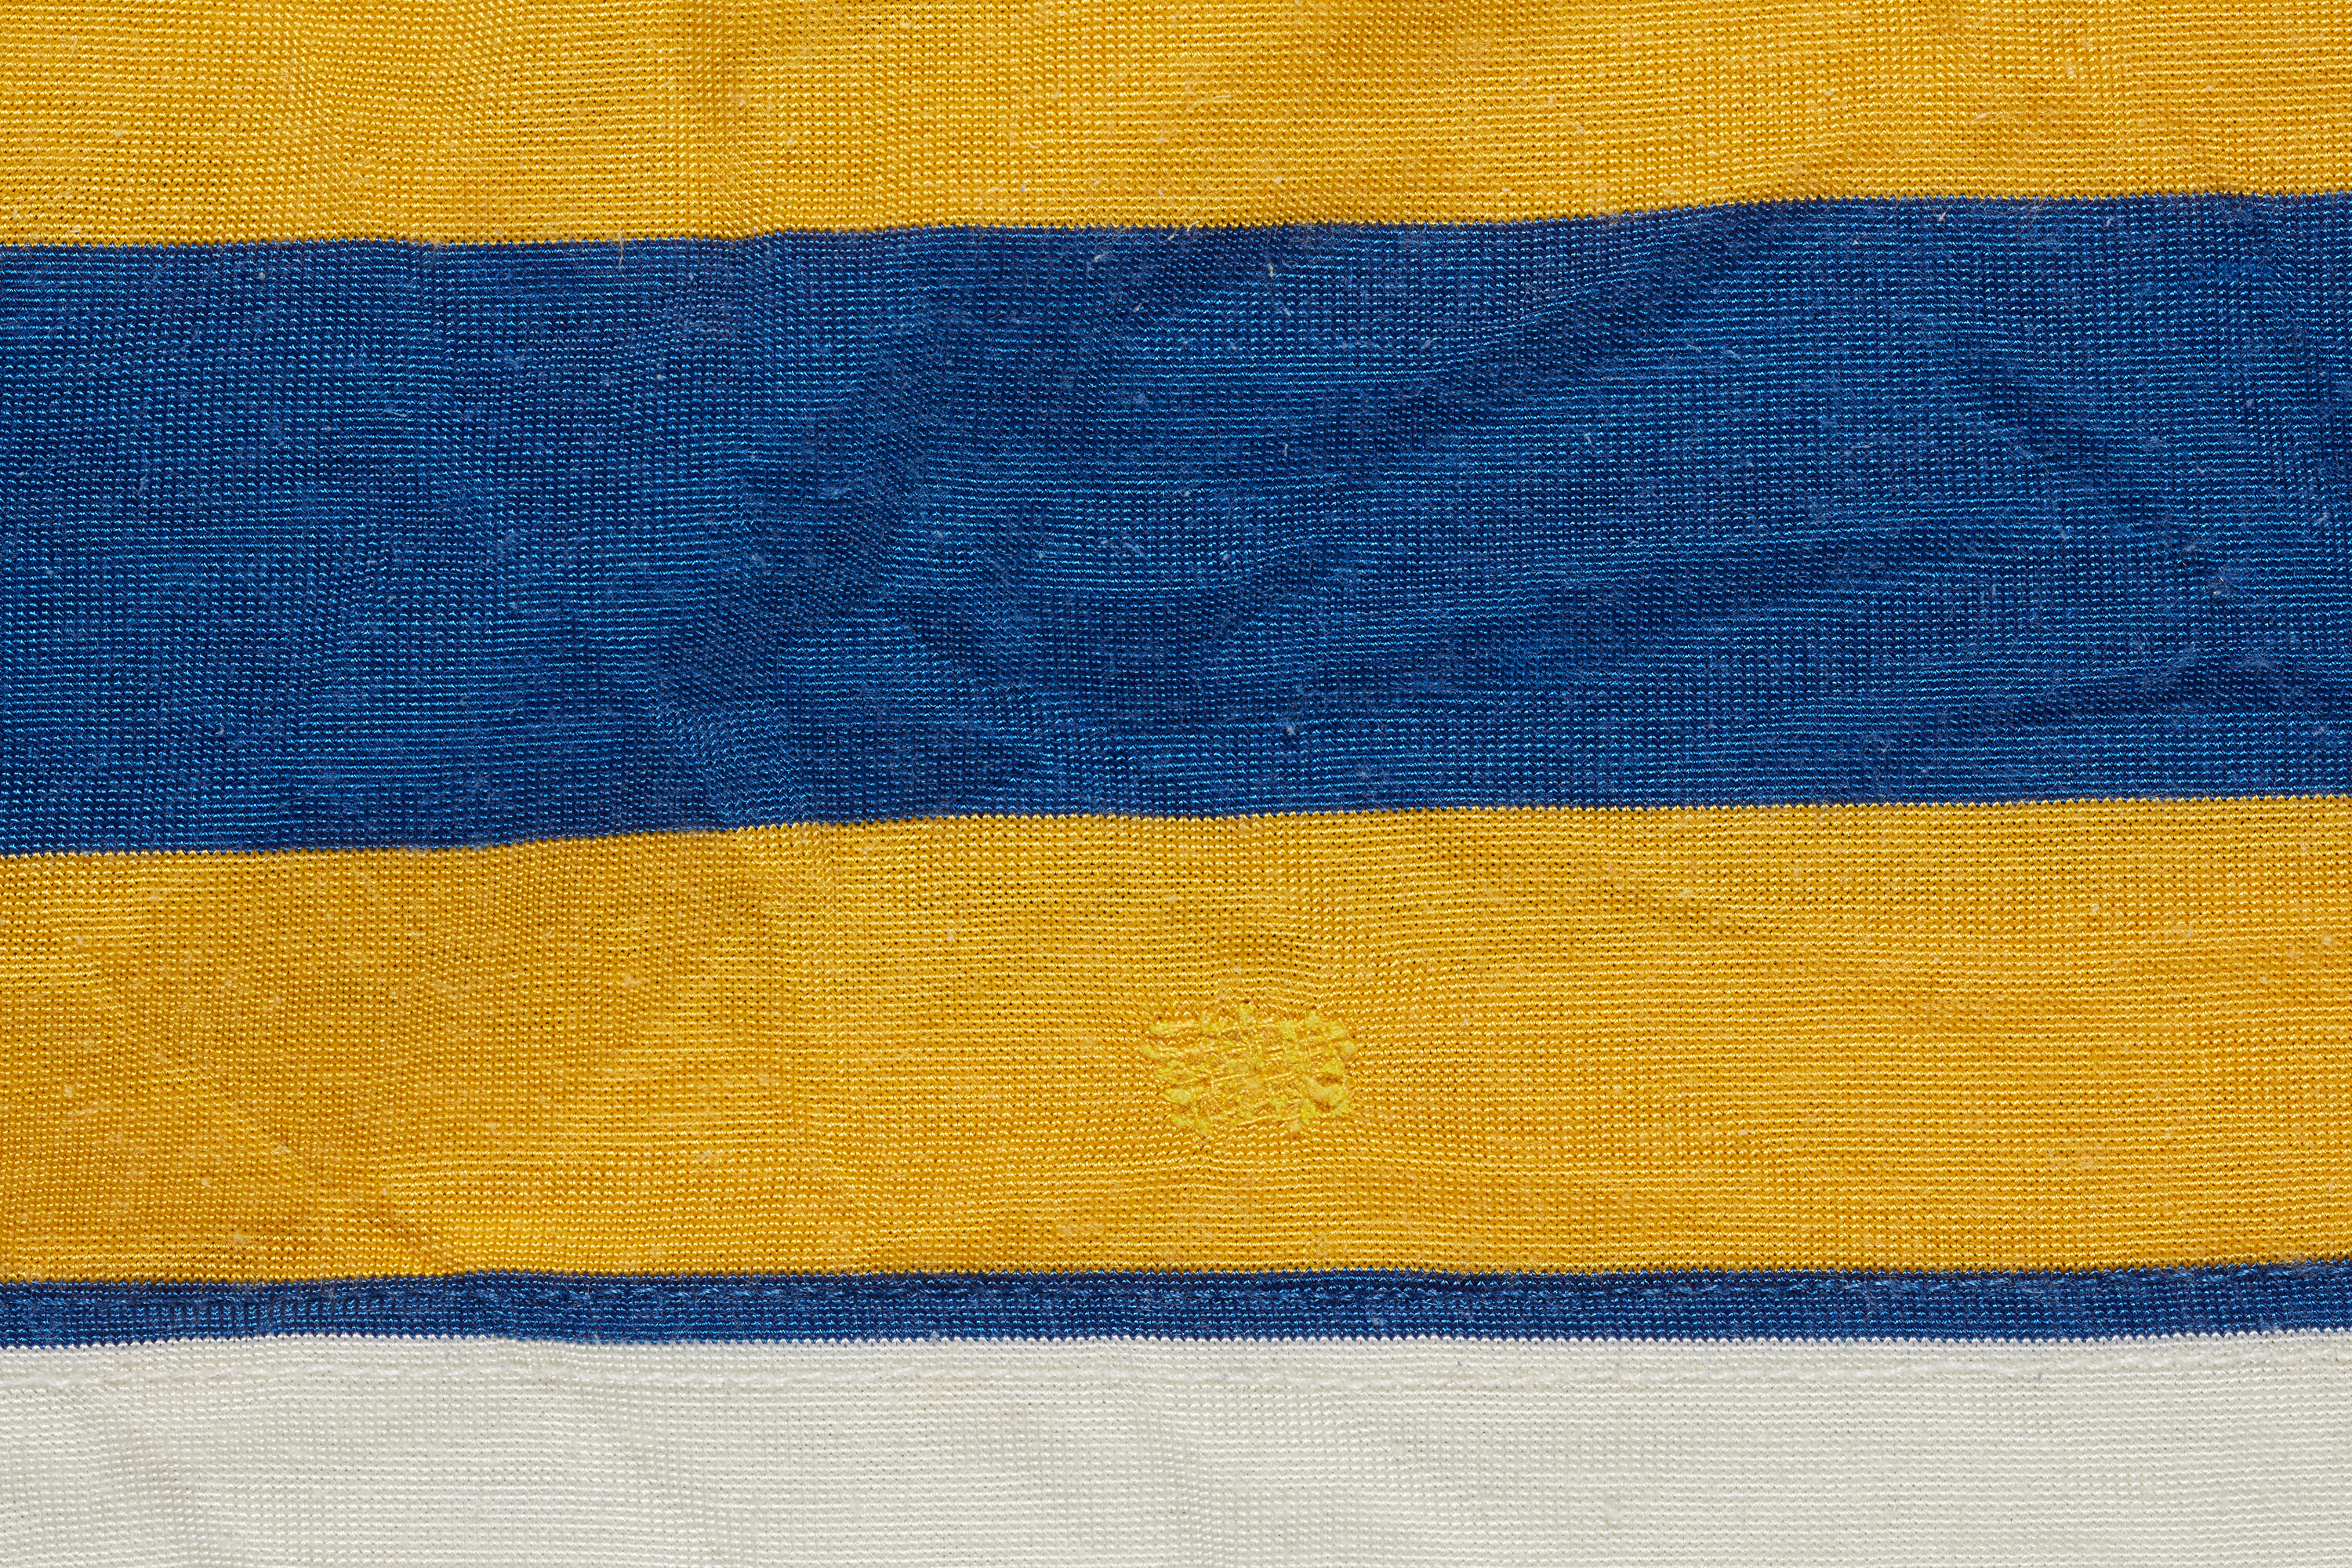 NHL St. Louis Blues 1984-85 uniform and jersey original art – Heritage  Sports Art